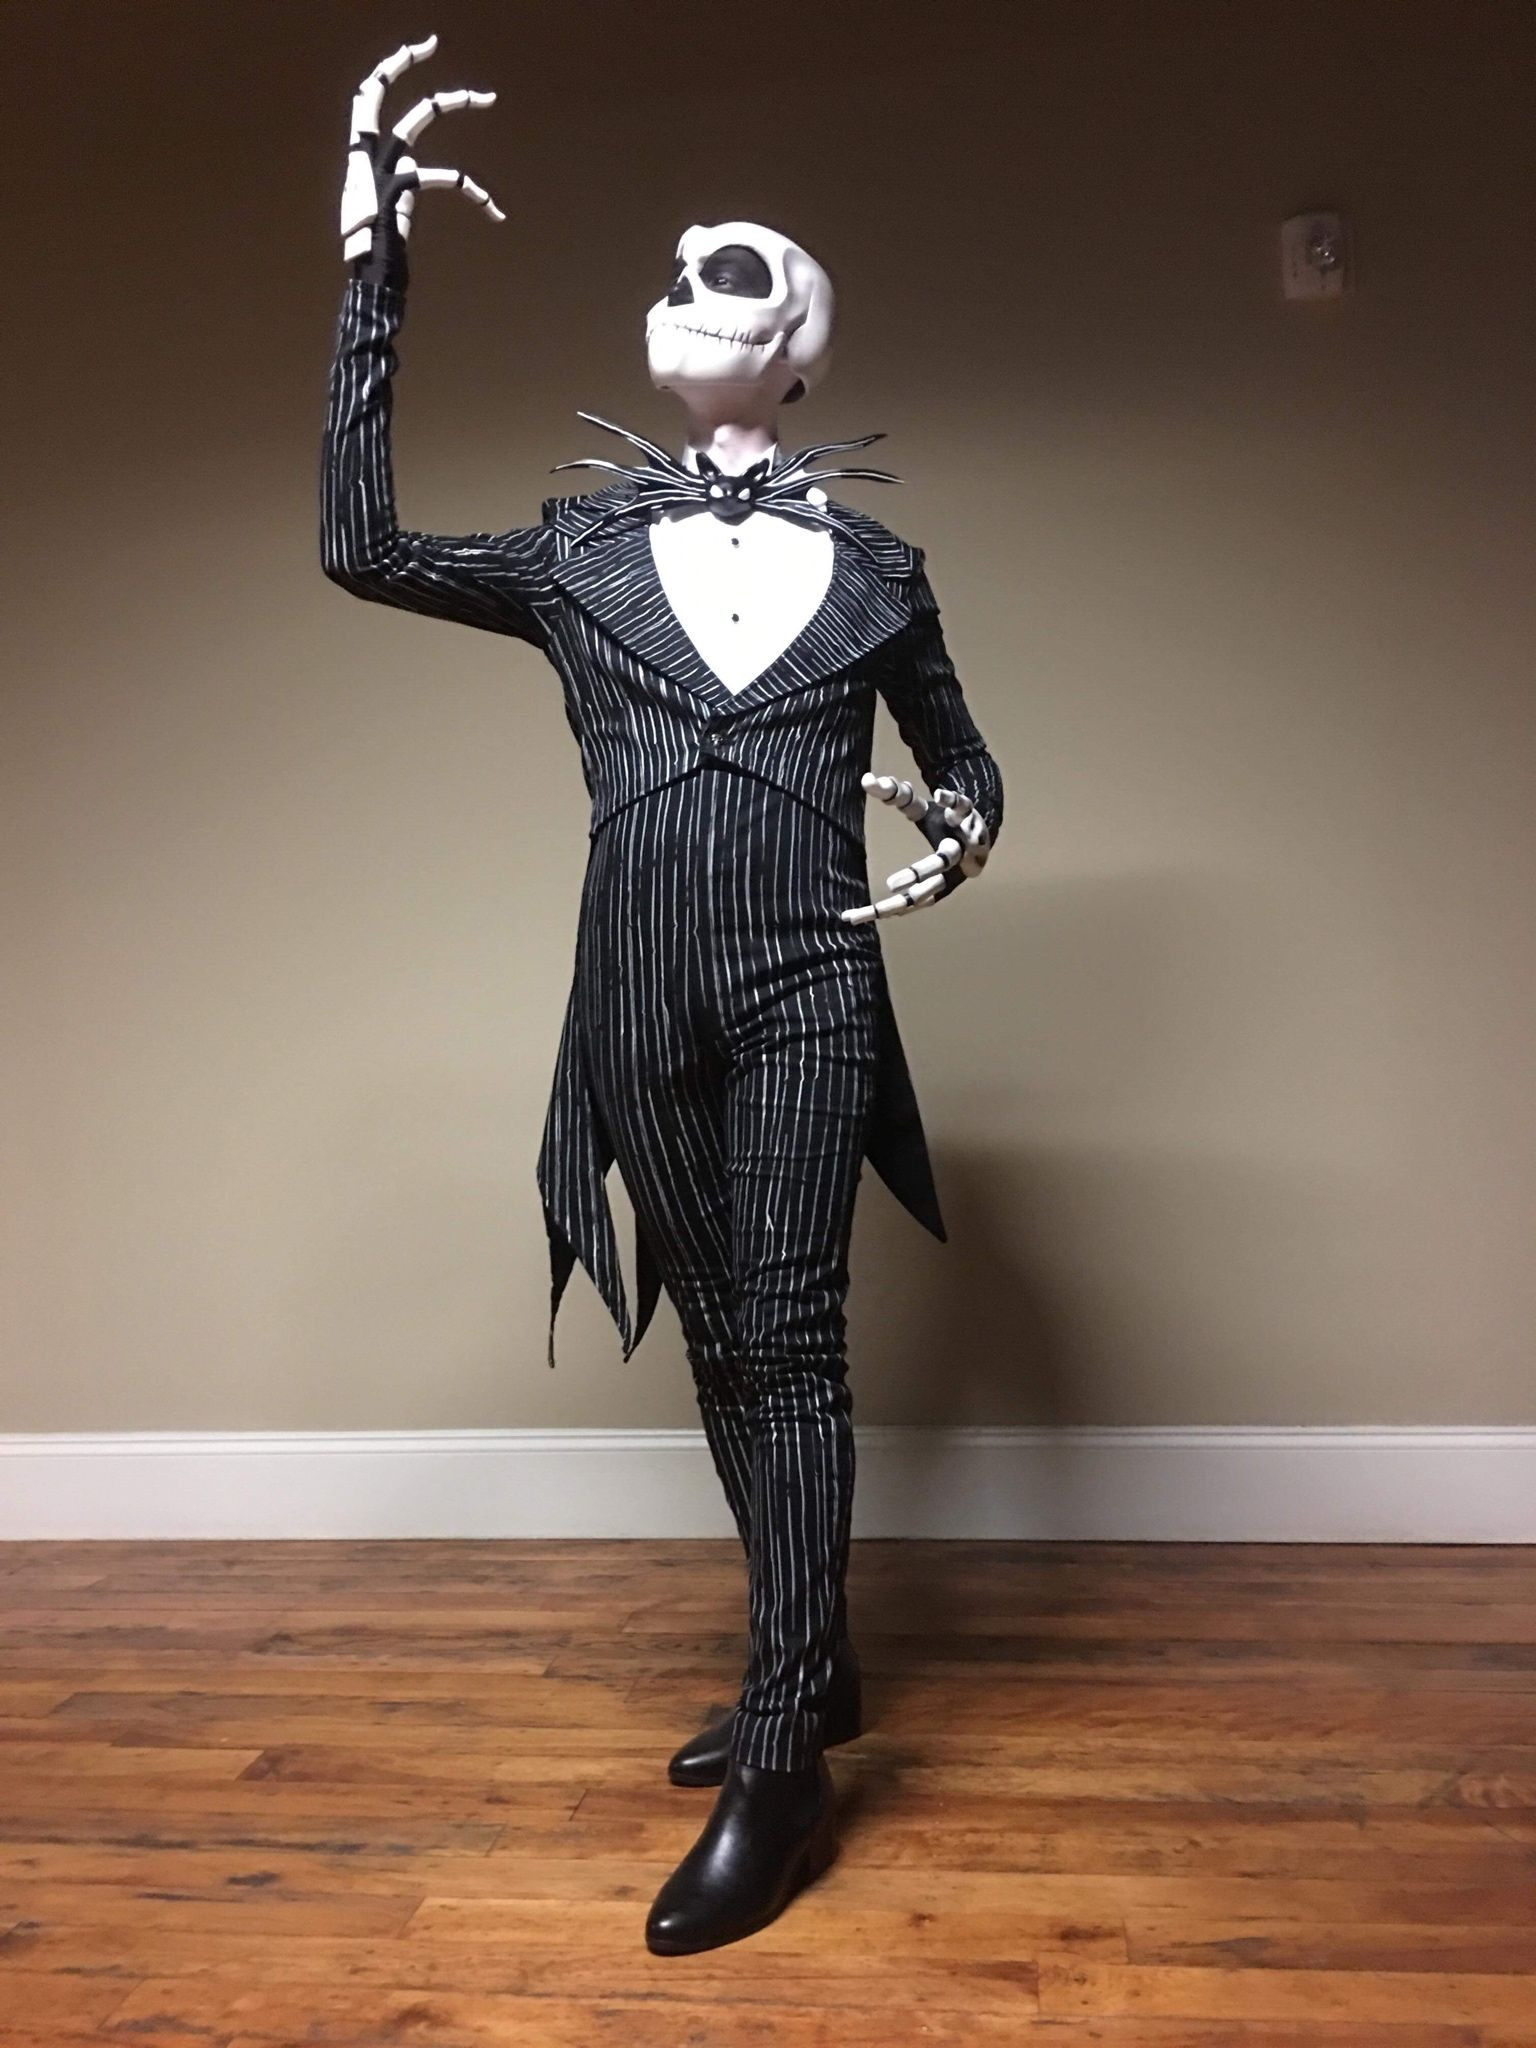 Jack Skellington DIY Costume
 Amazing Jack Skellington costume in 2019